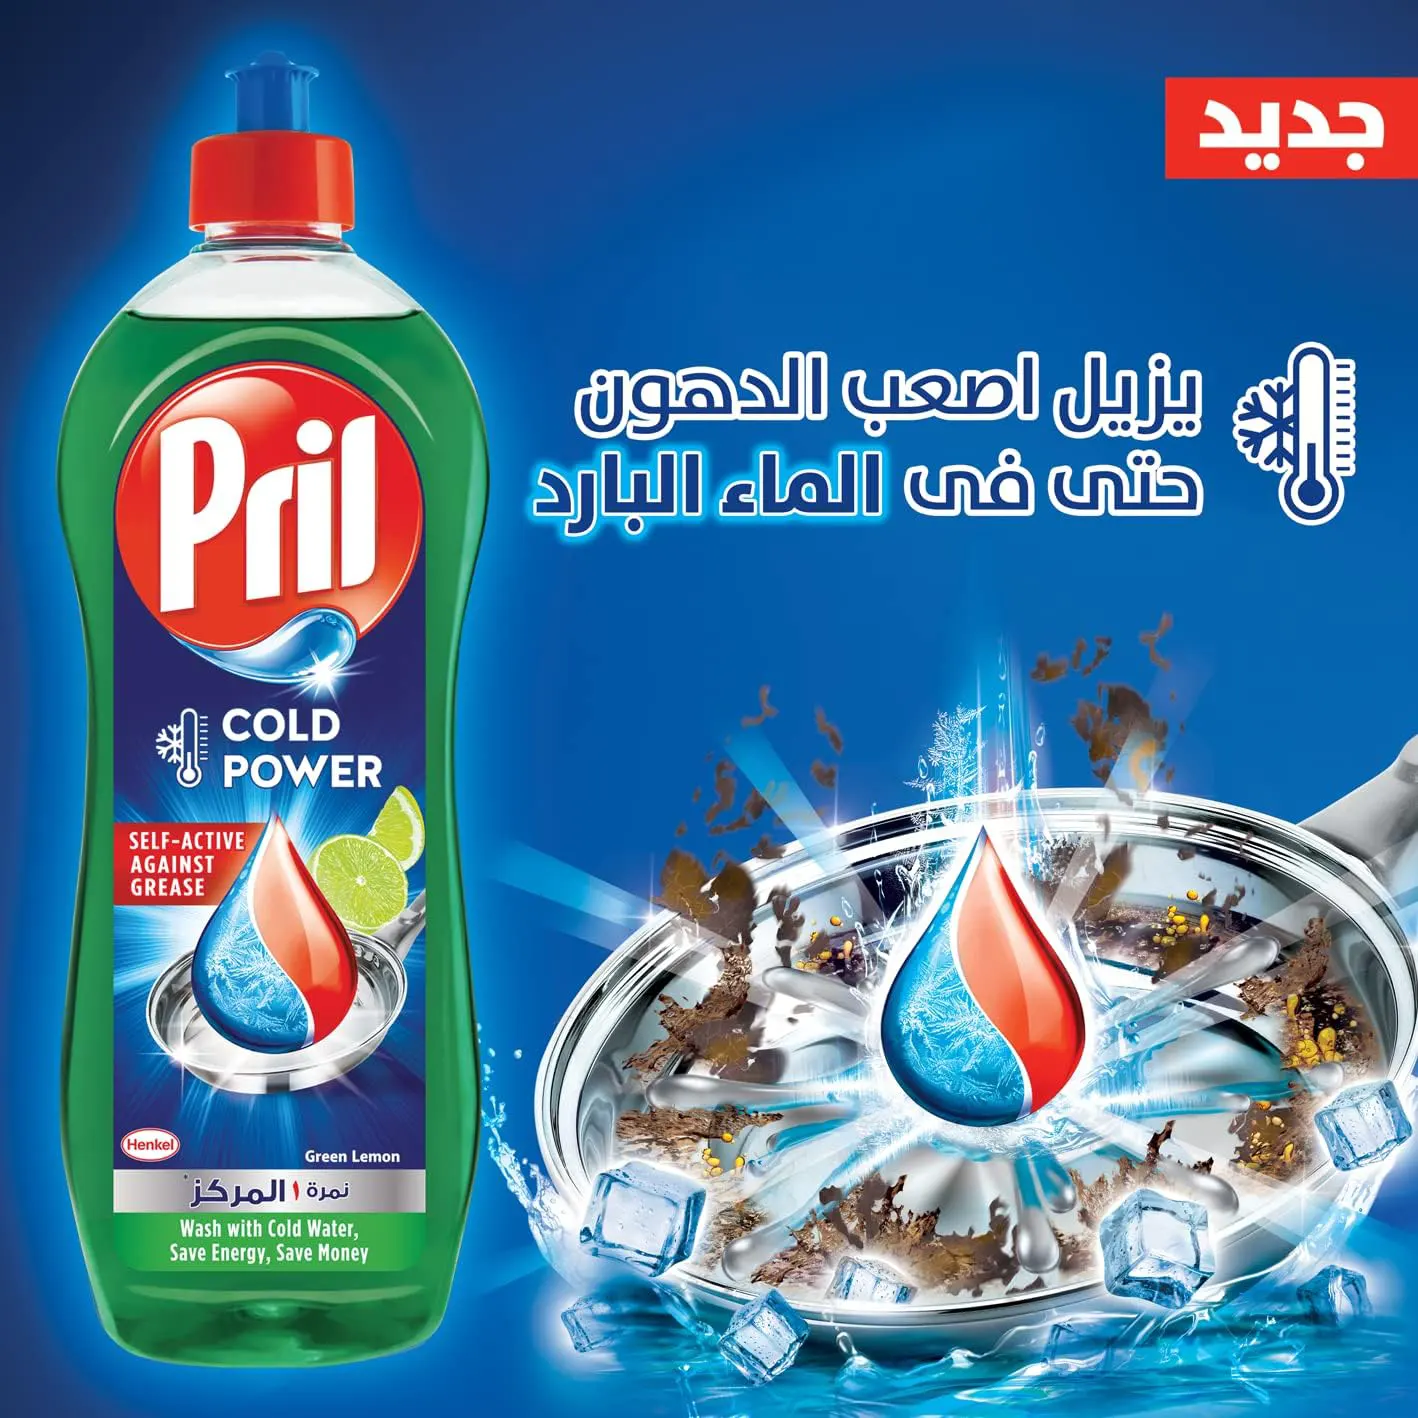 Pril dishwashing liquid 5*1, lemon scent, 1 litre